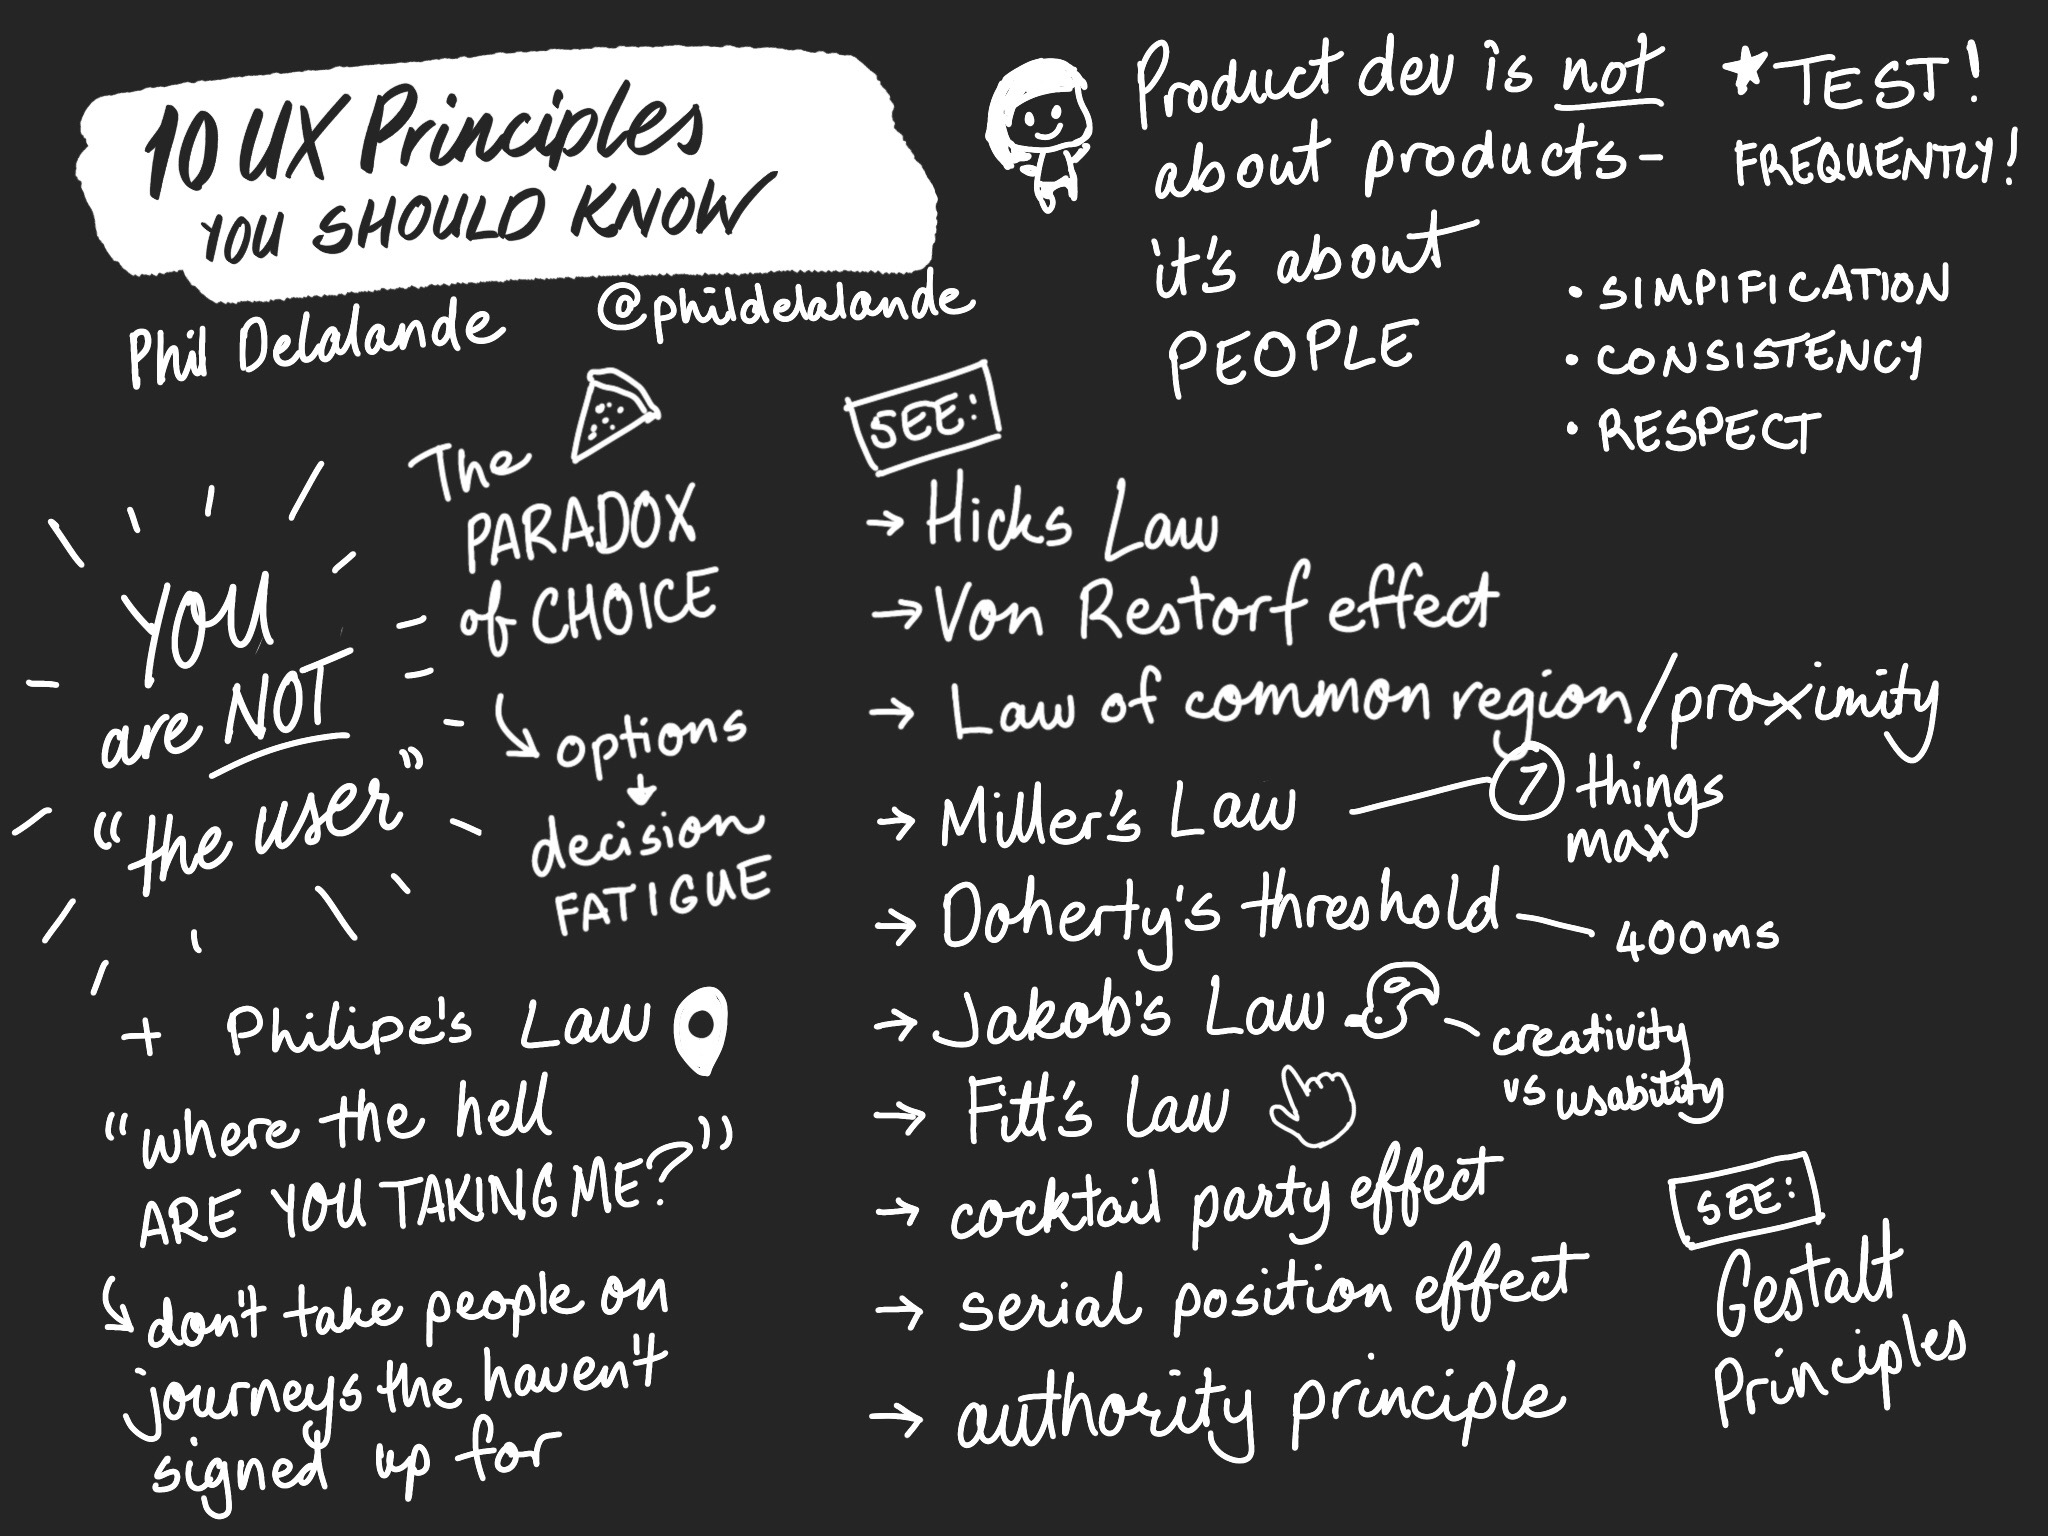 assets/sketching/img_1162.jpg|Sketchnote of 10 UX principles you should know by Phil Delalande